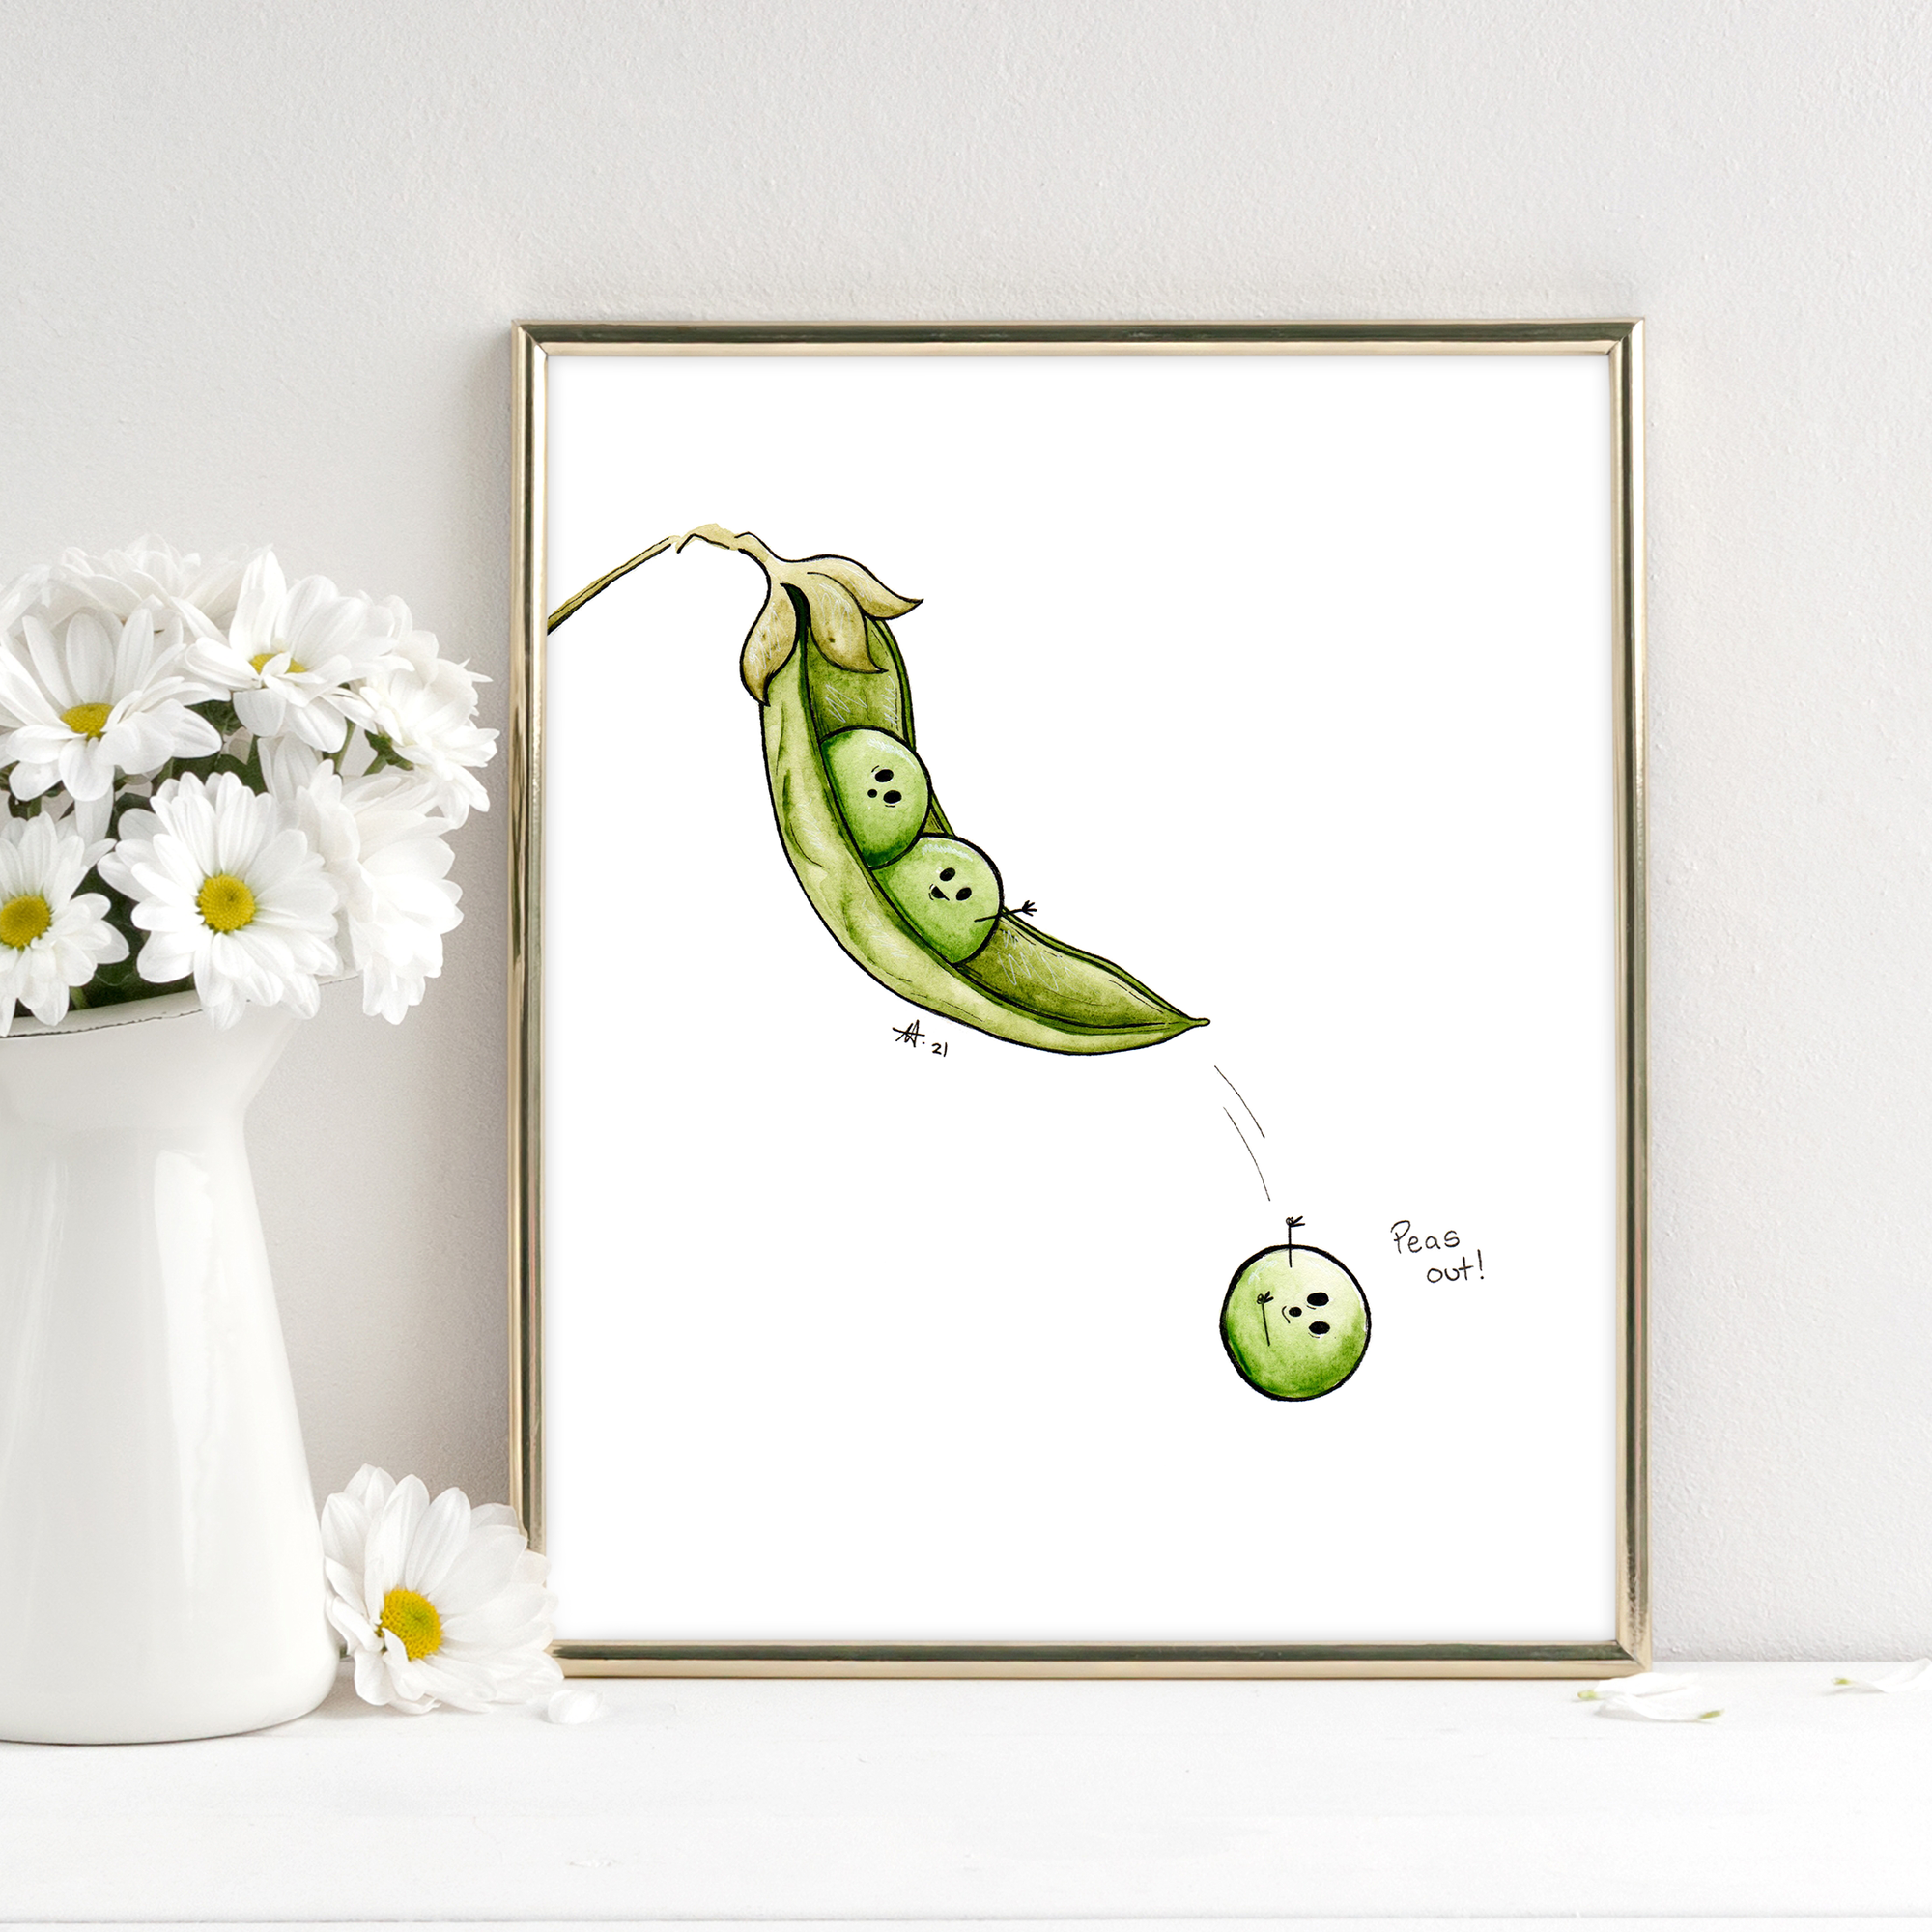 "Peas out!" - Fine Art Print